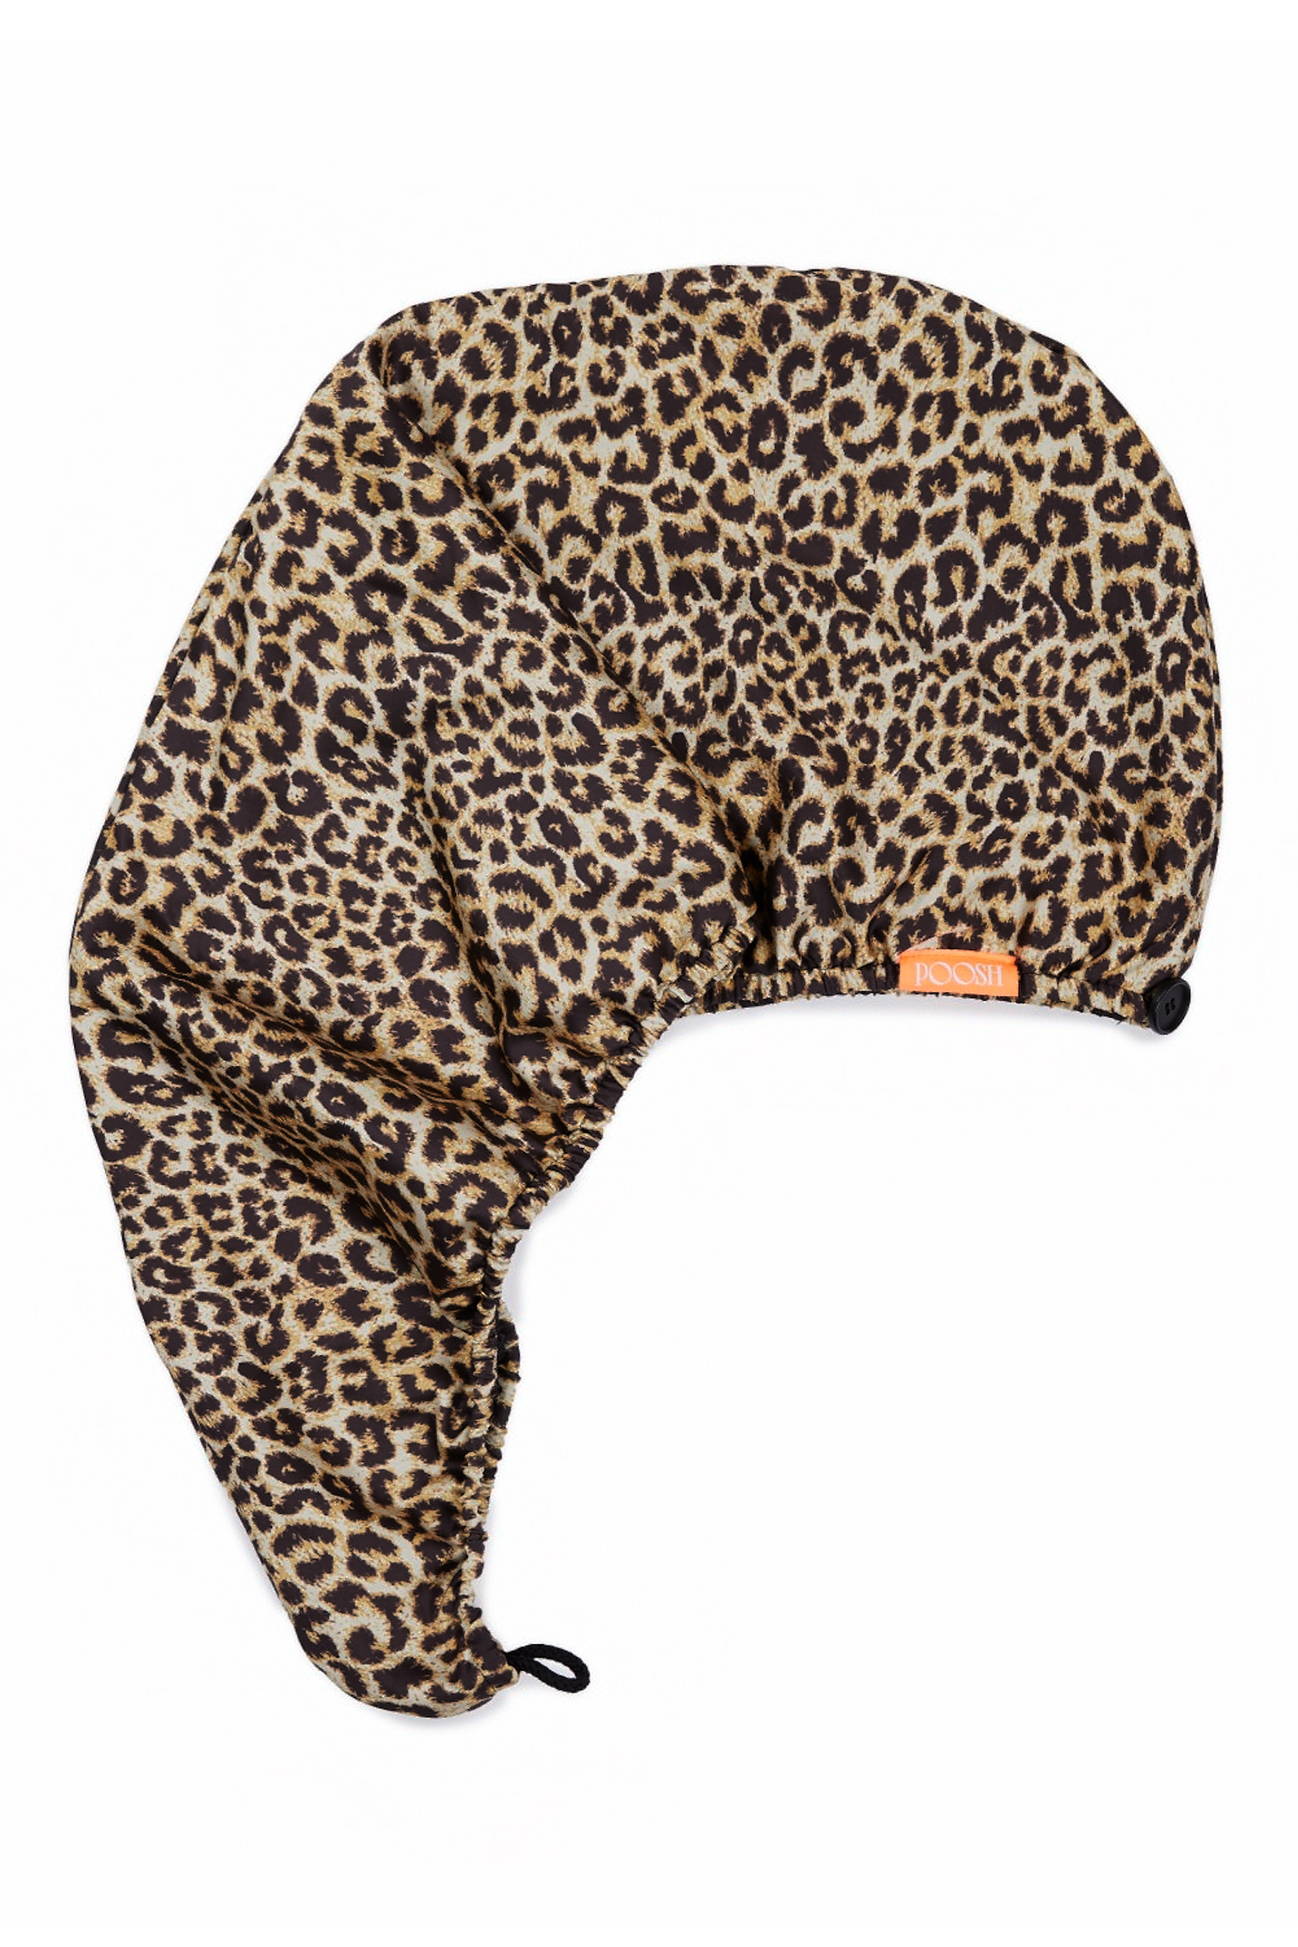 AQUISxPOOSH Rapid Dry Hair Turban - Leopard Print AQUIS